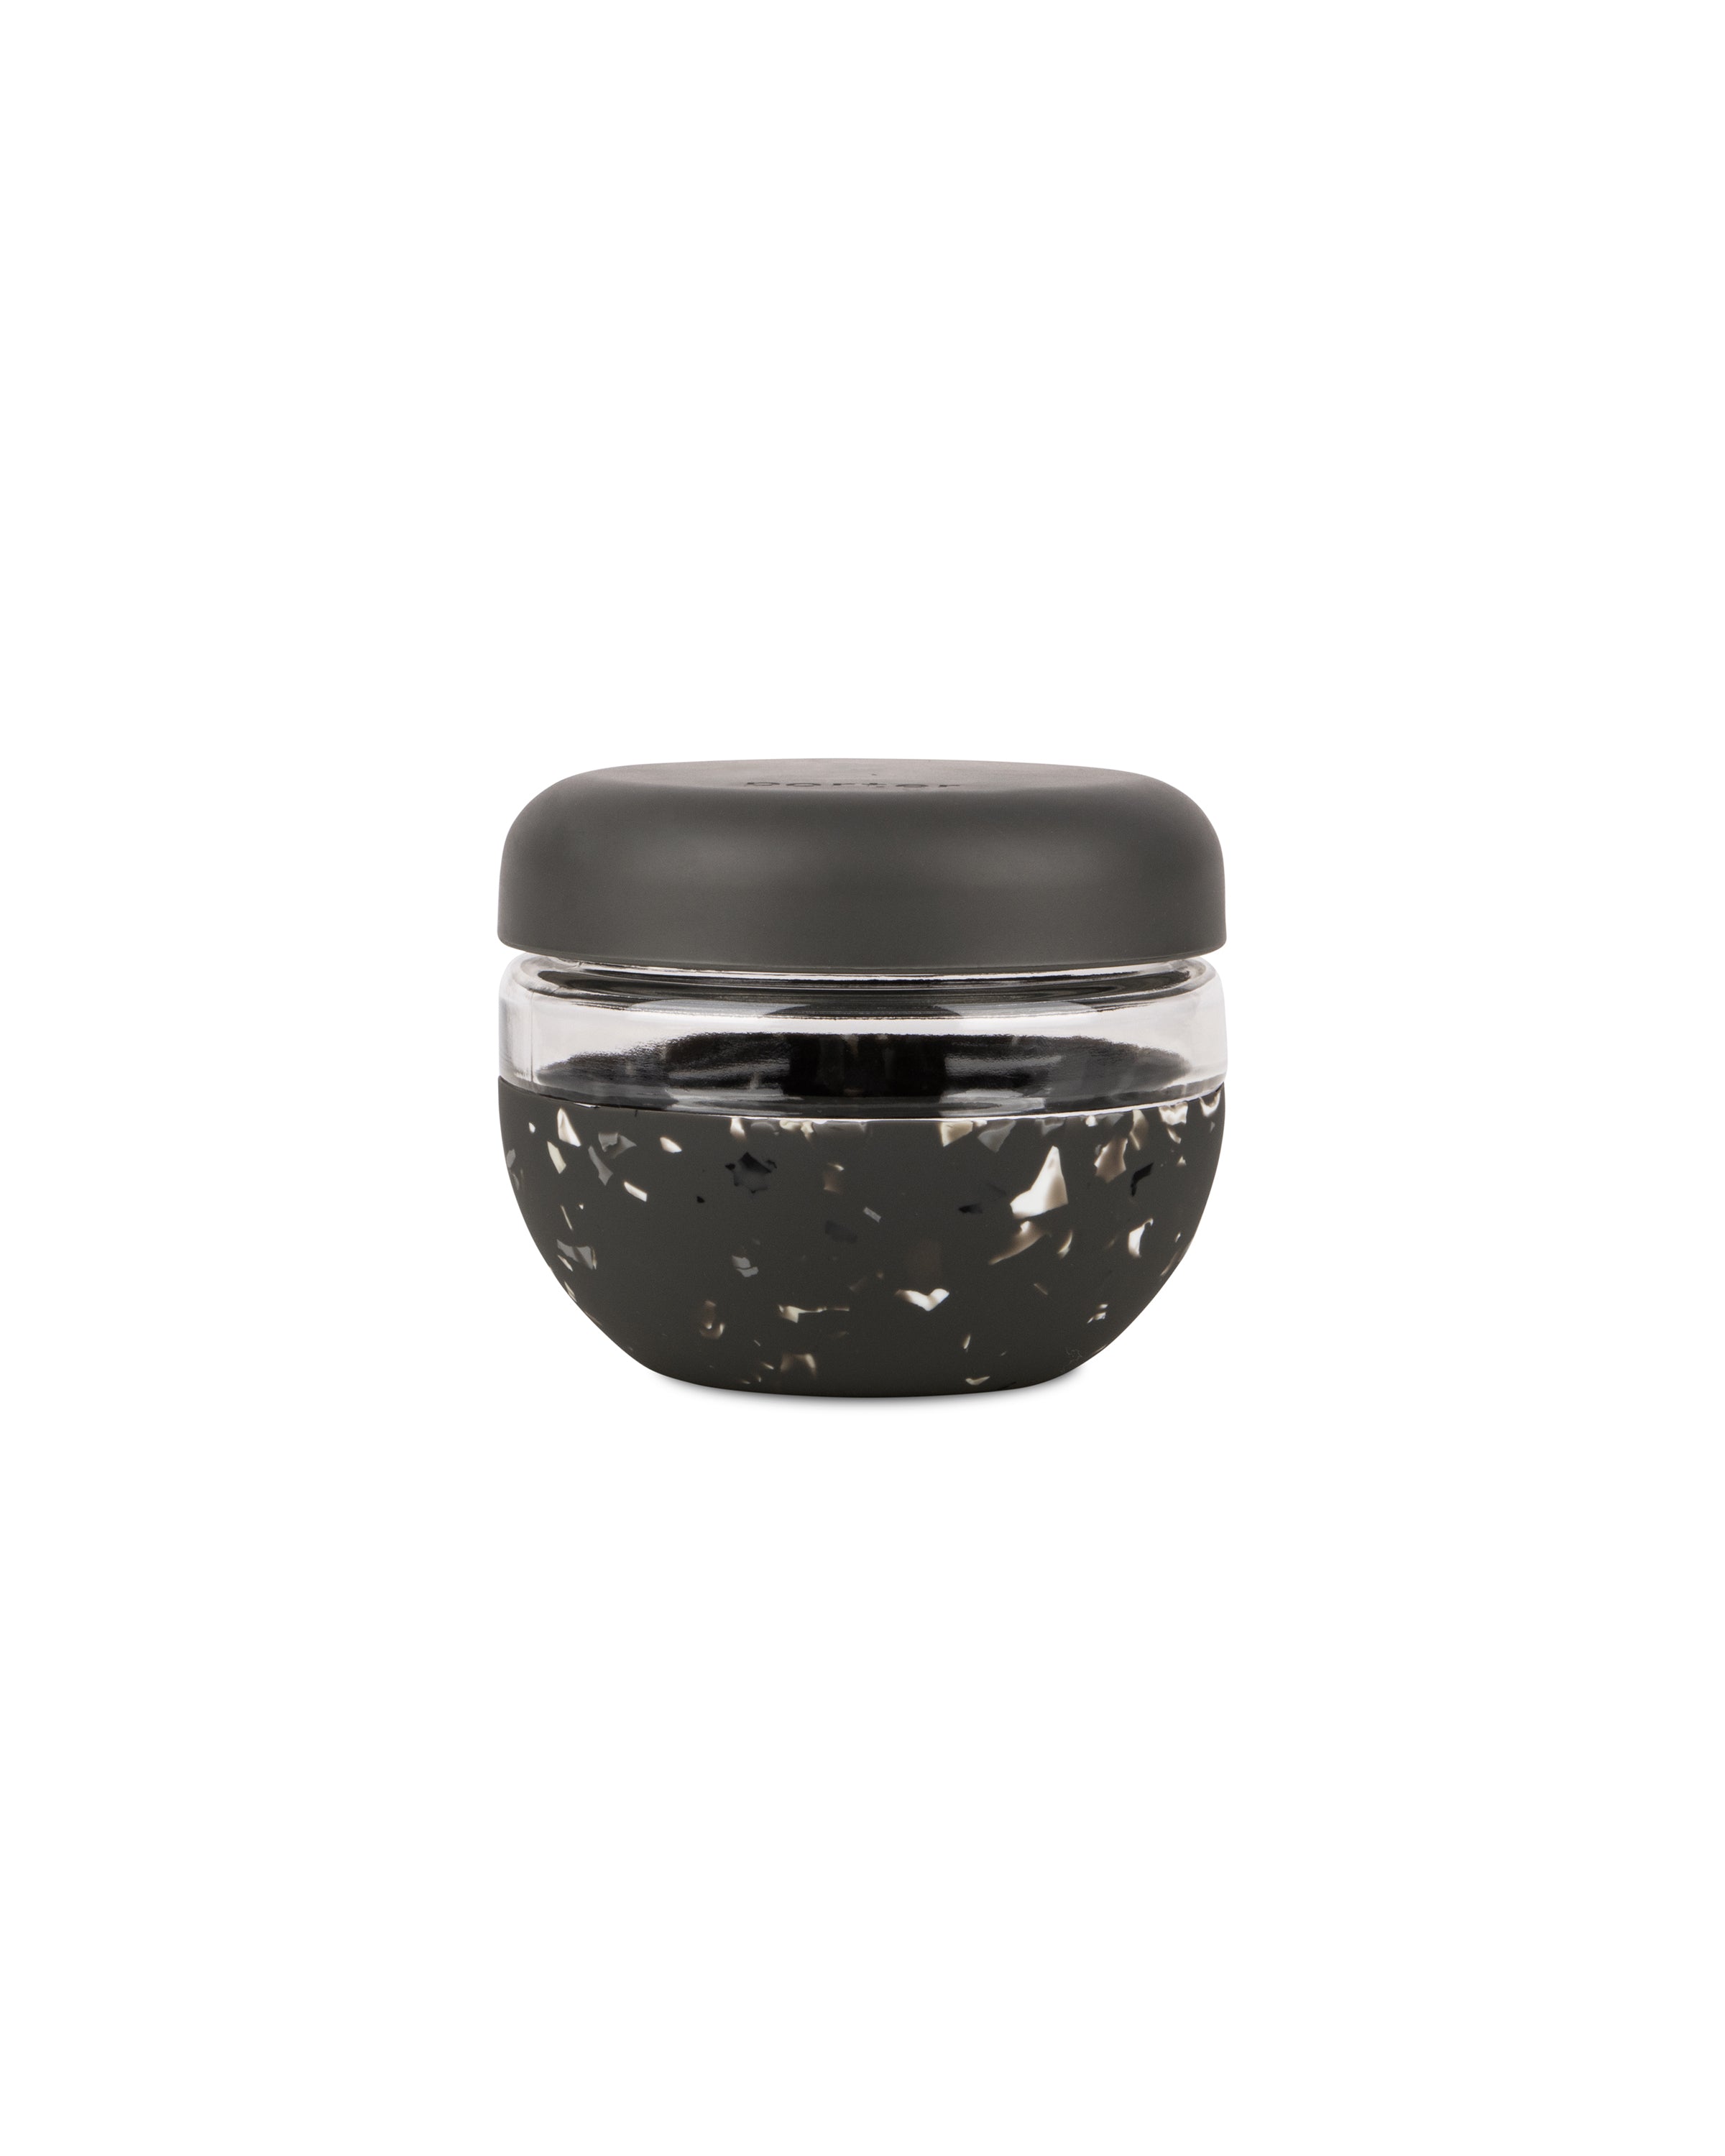 Porter Seal Tight Bowl (Glass, Slate - 16 oz) – Wicked+